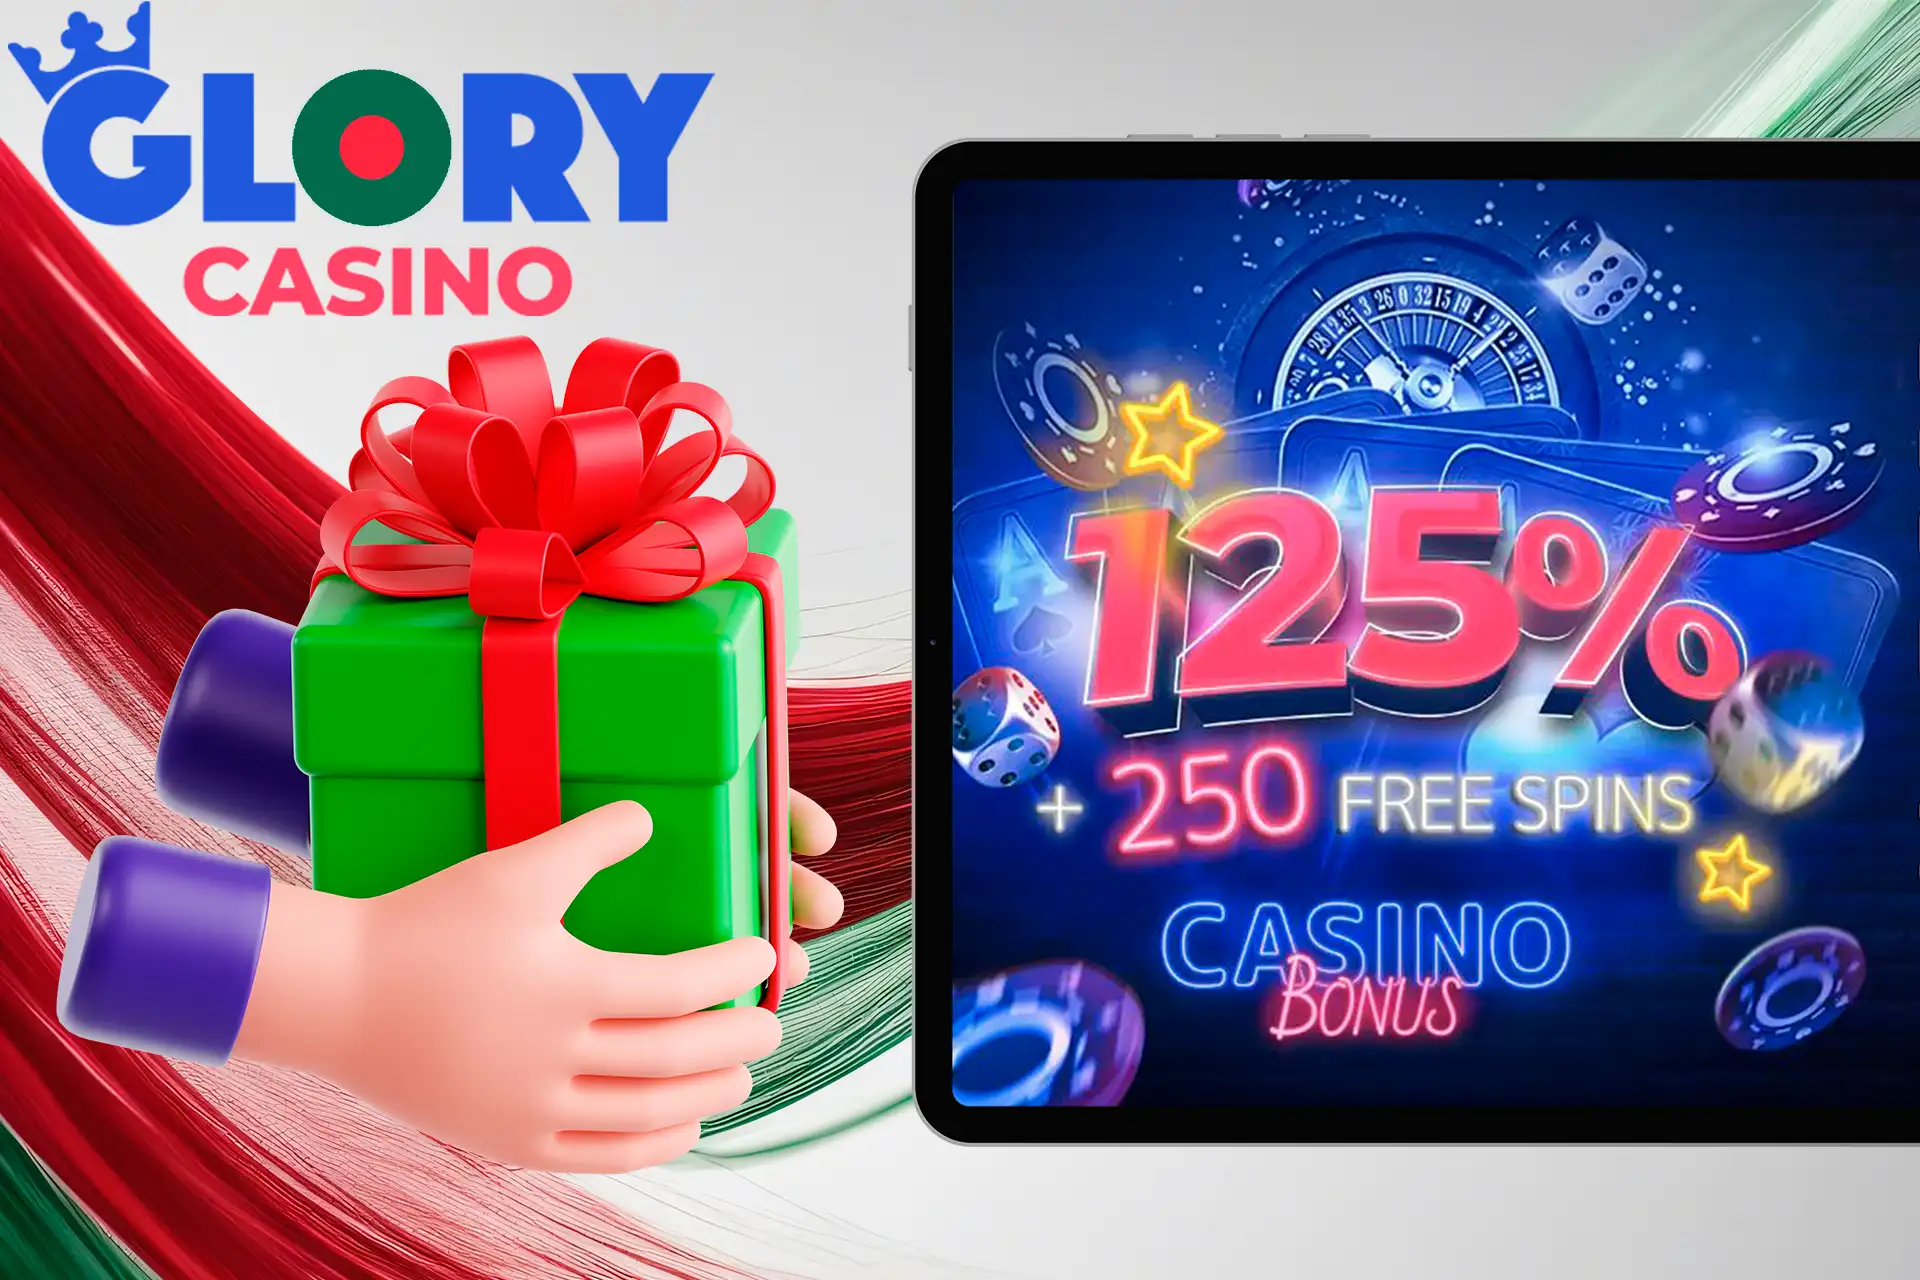 Claim your Glory Casino Bangladesh welcome bonus